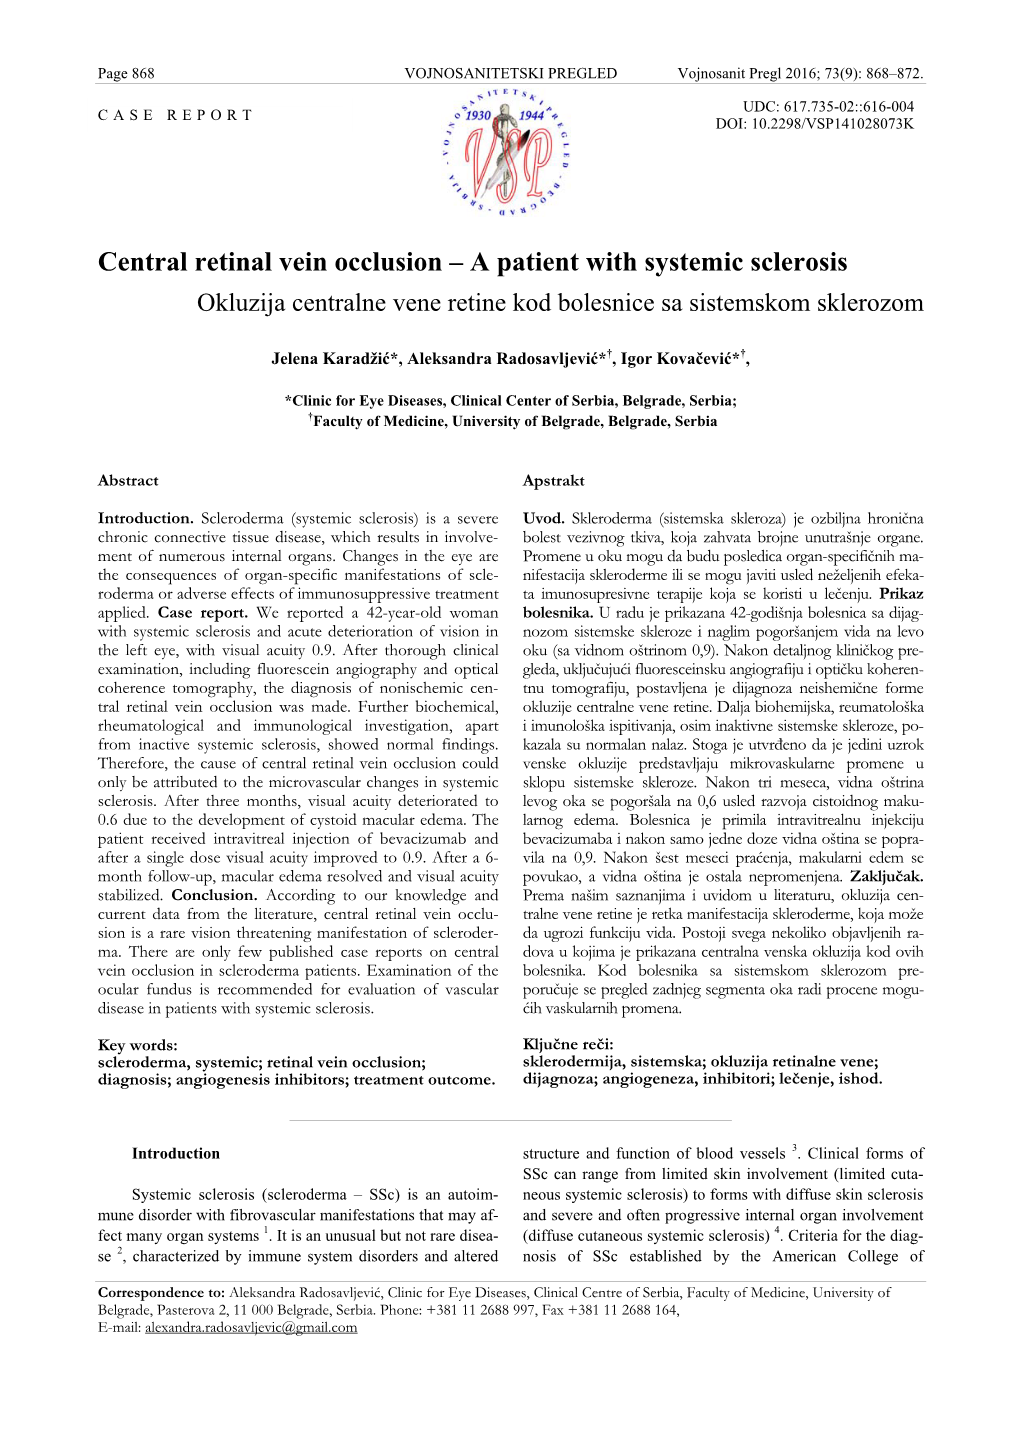 Central Retinal Vein Occlusion – a Patient with Systemic Sclerosis Okluzija Centralne Vene Retine Kod Bolesnice Sa Sistemskom Sklerozom